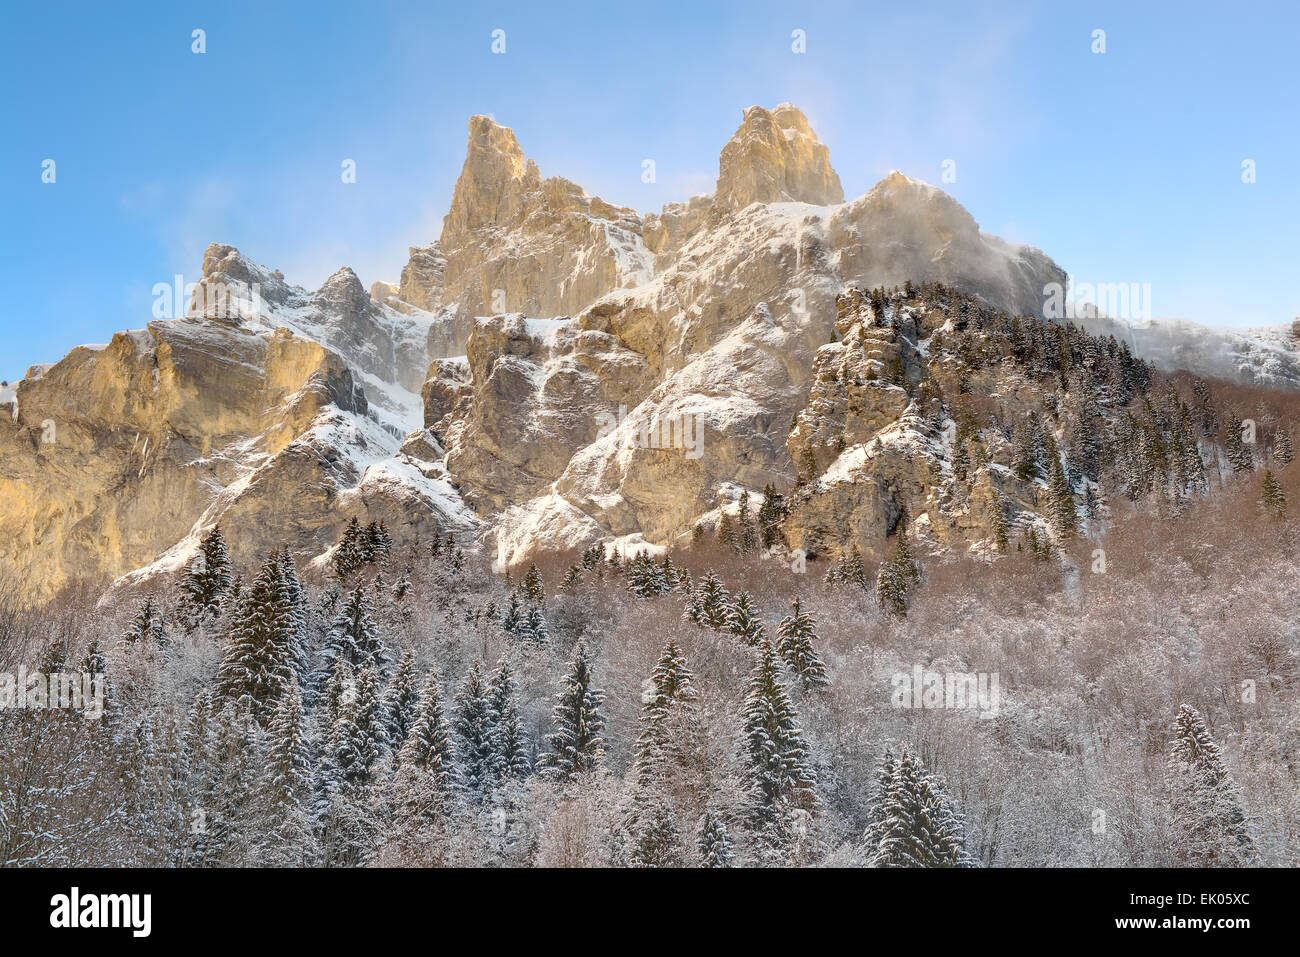 french alps snowy rocky mountain landscape on blue sky background Stock Photo